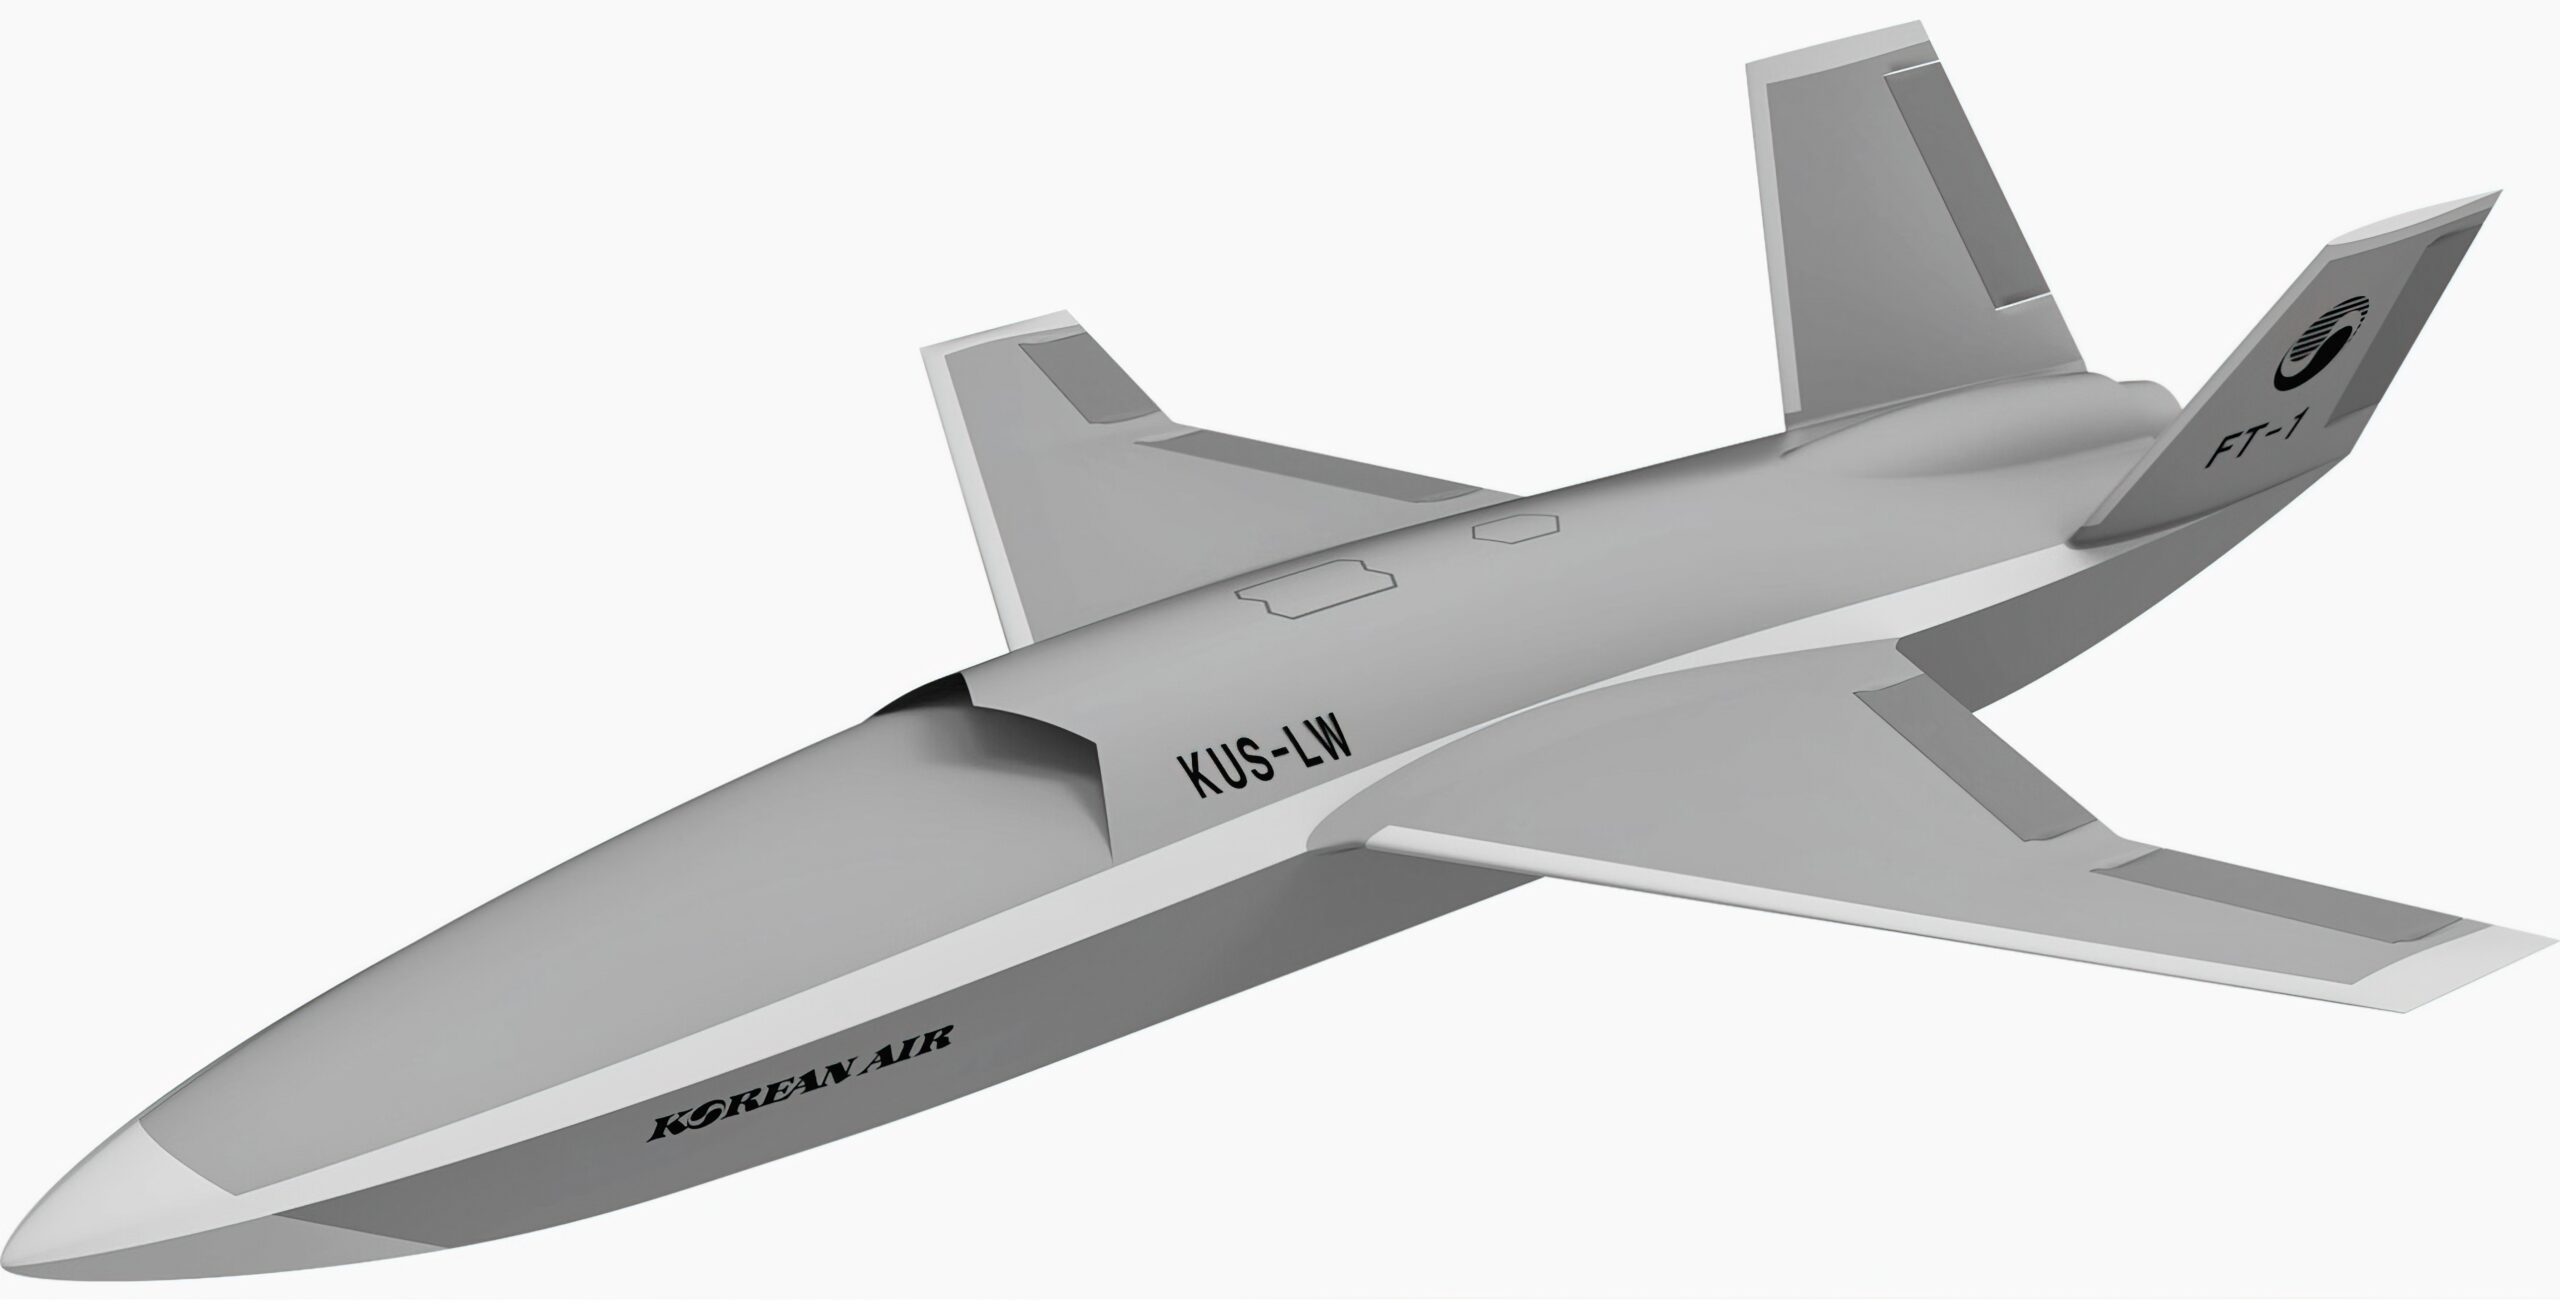 KUS-LW-Korean-Air-scaled.jpeg